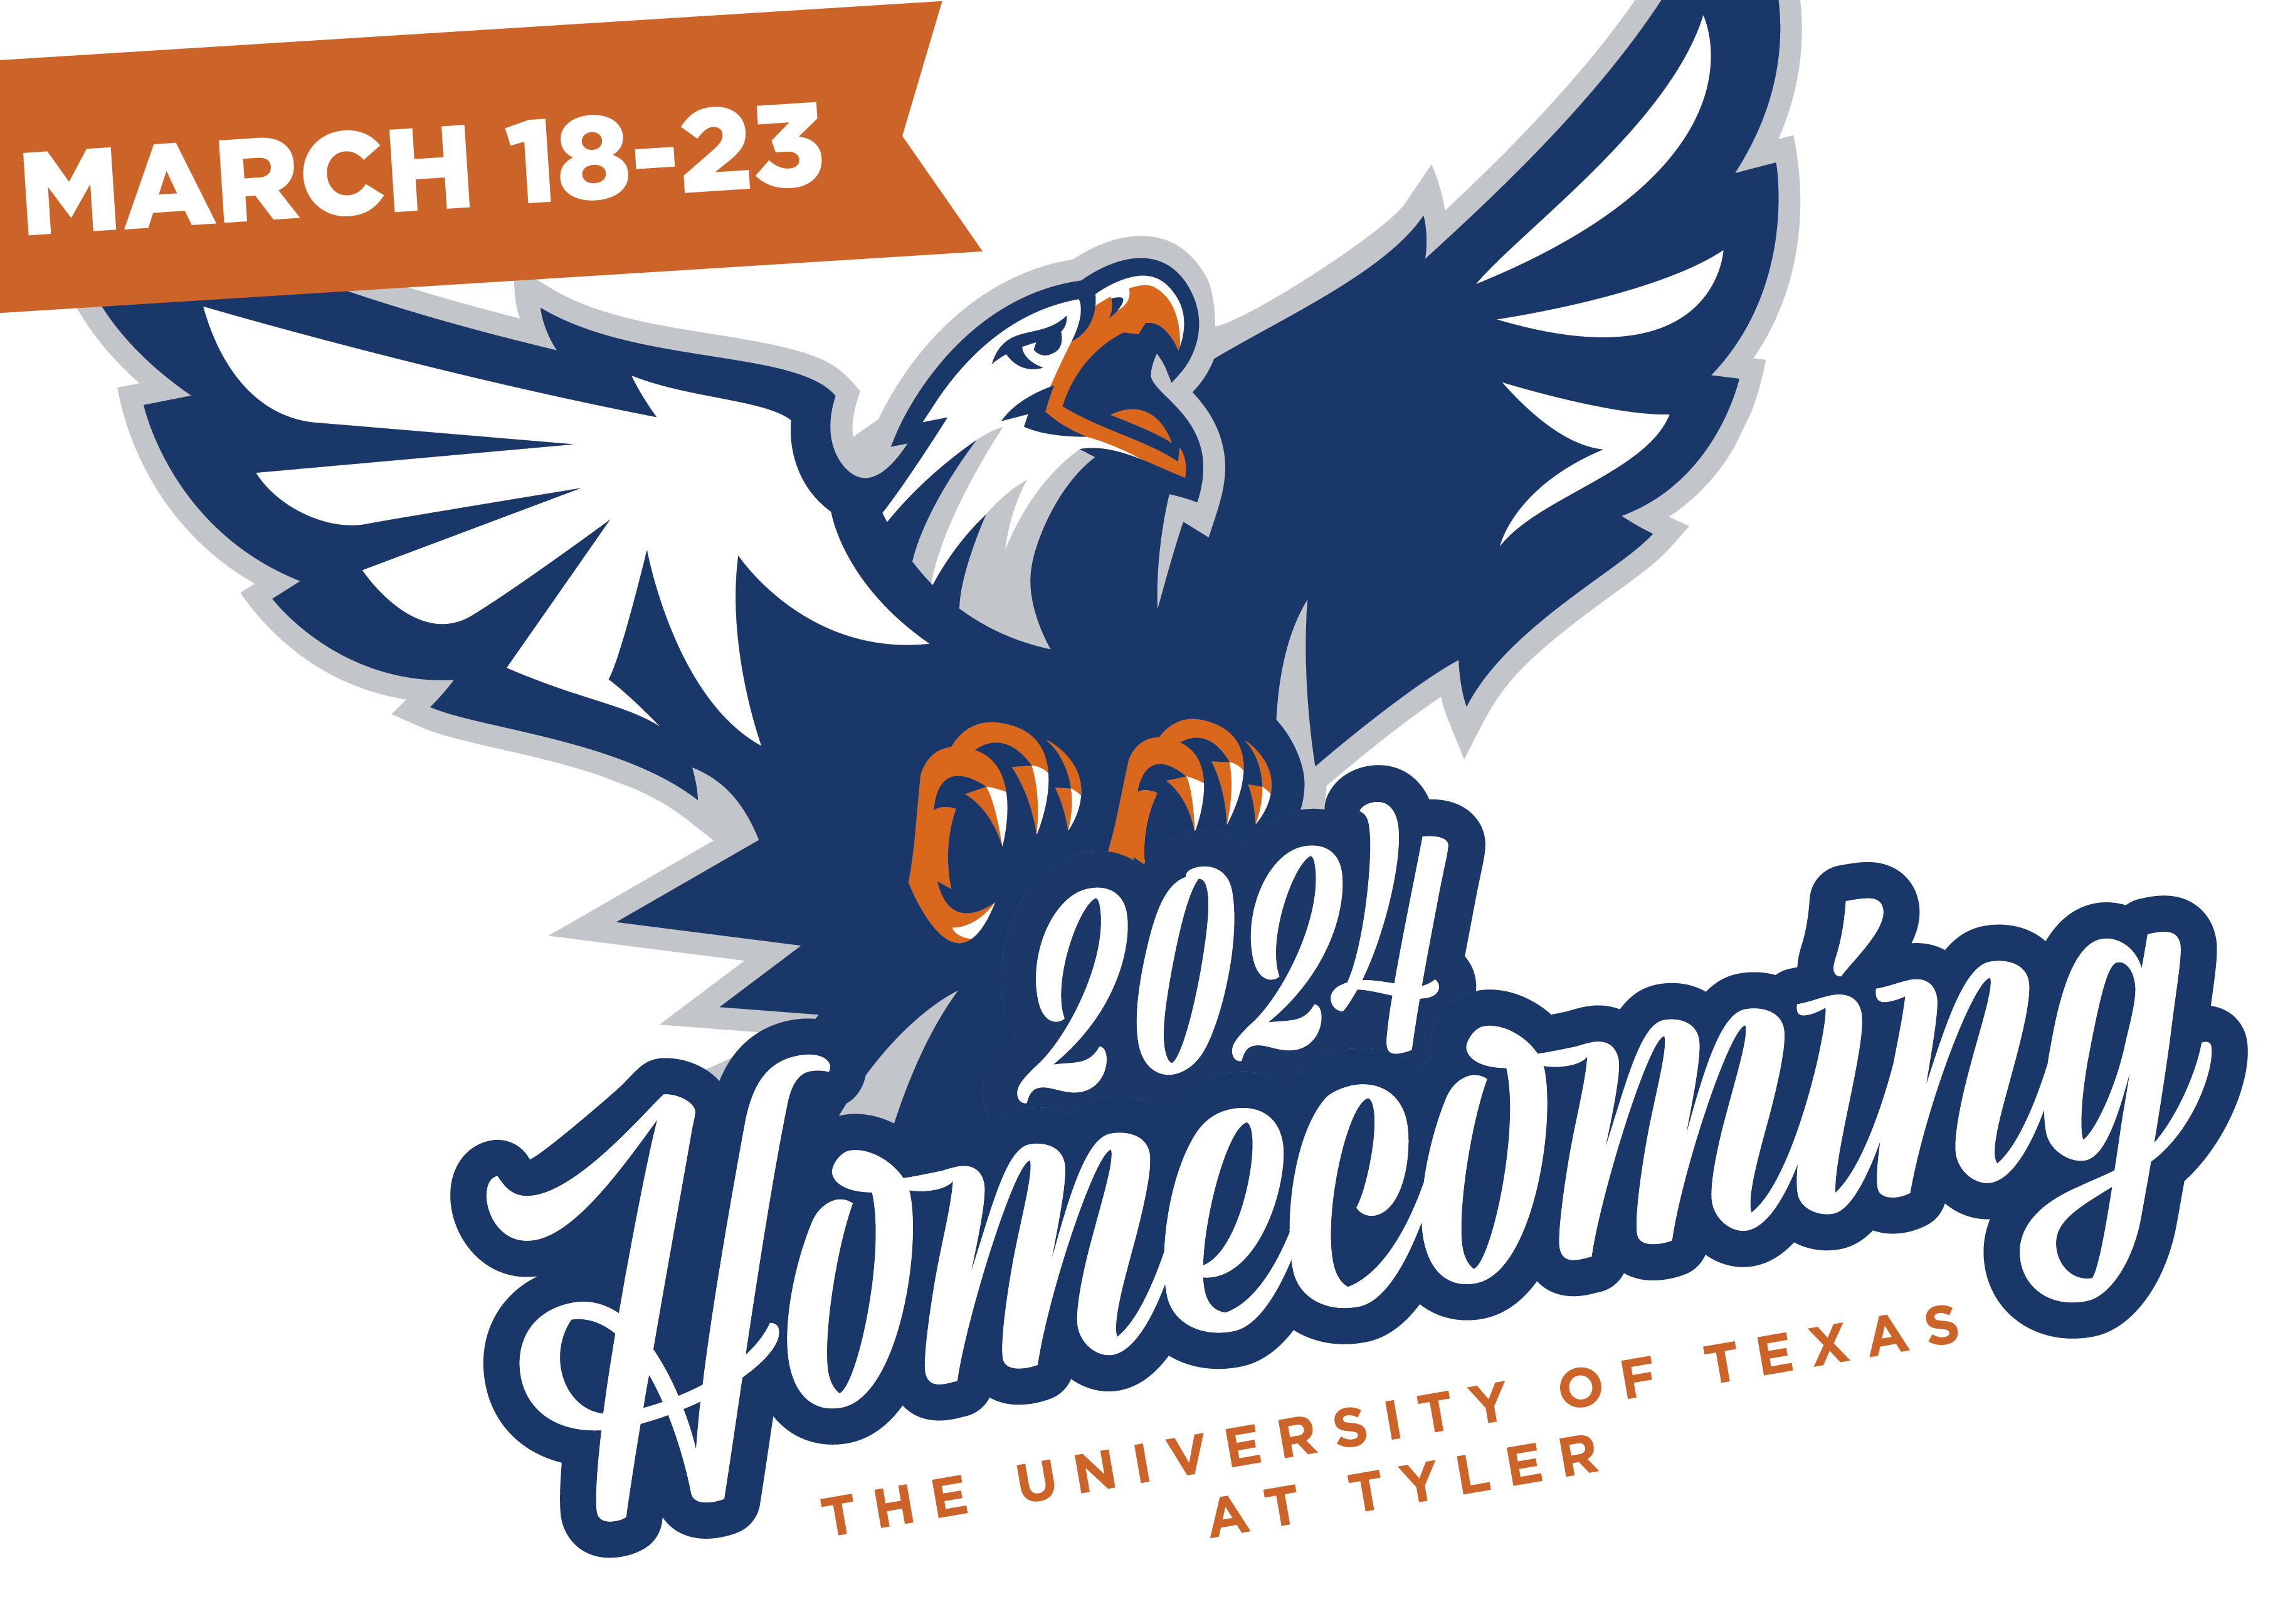 Homecoming Image Logo